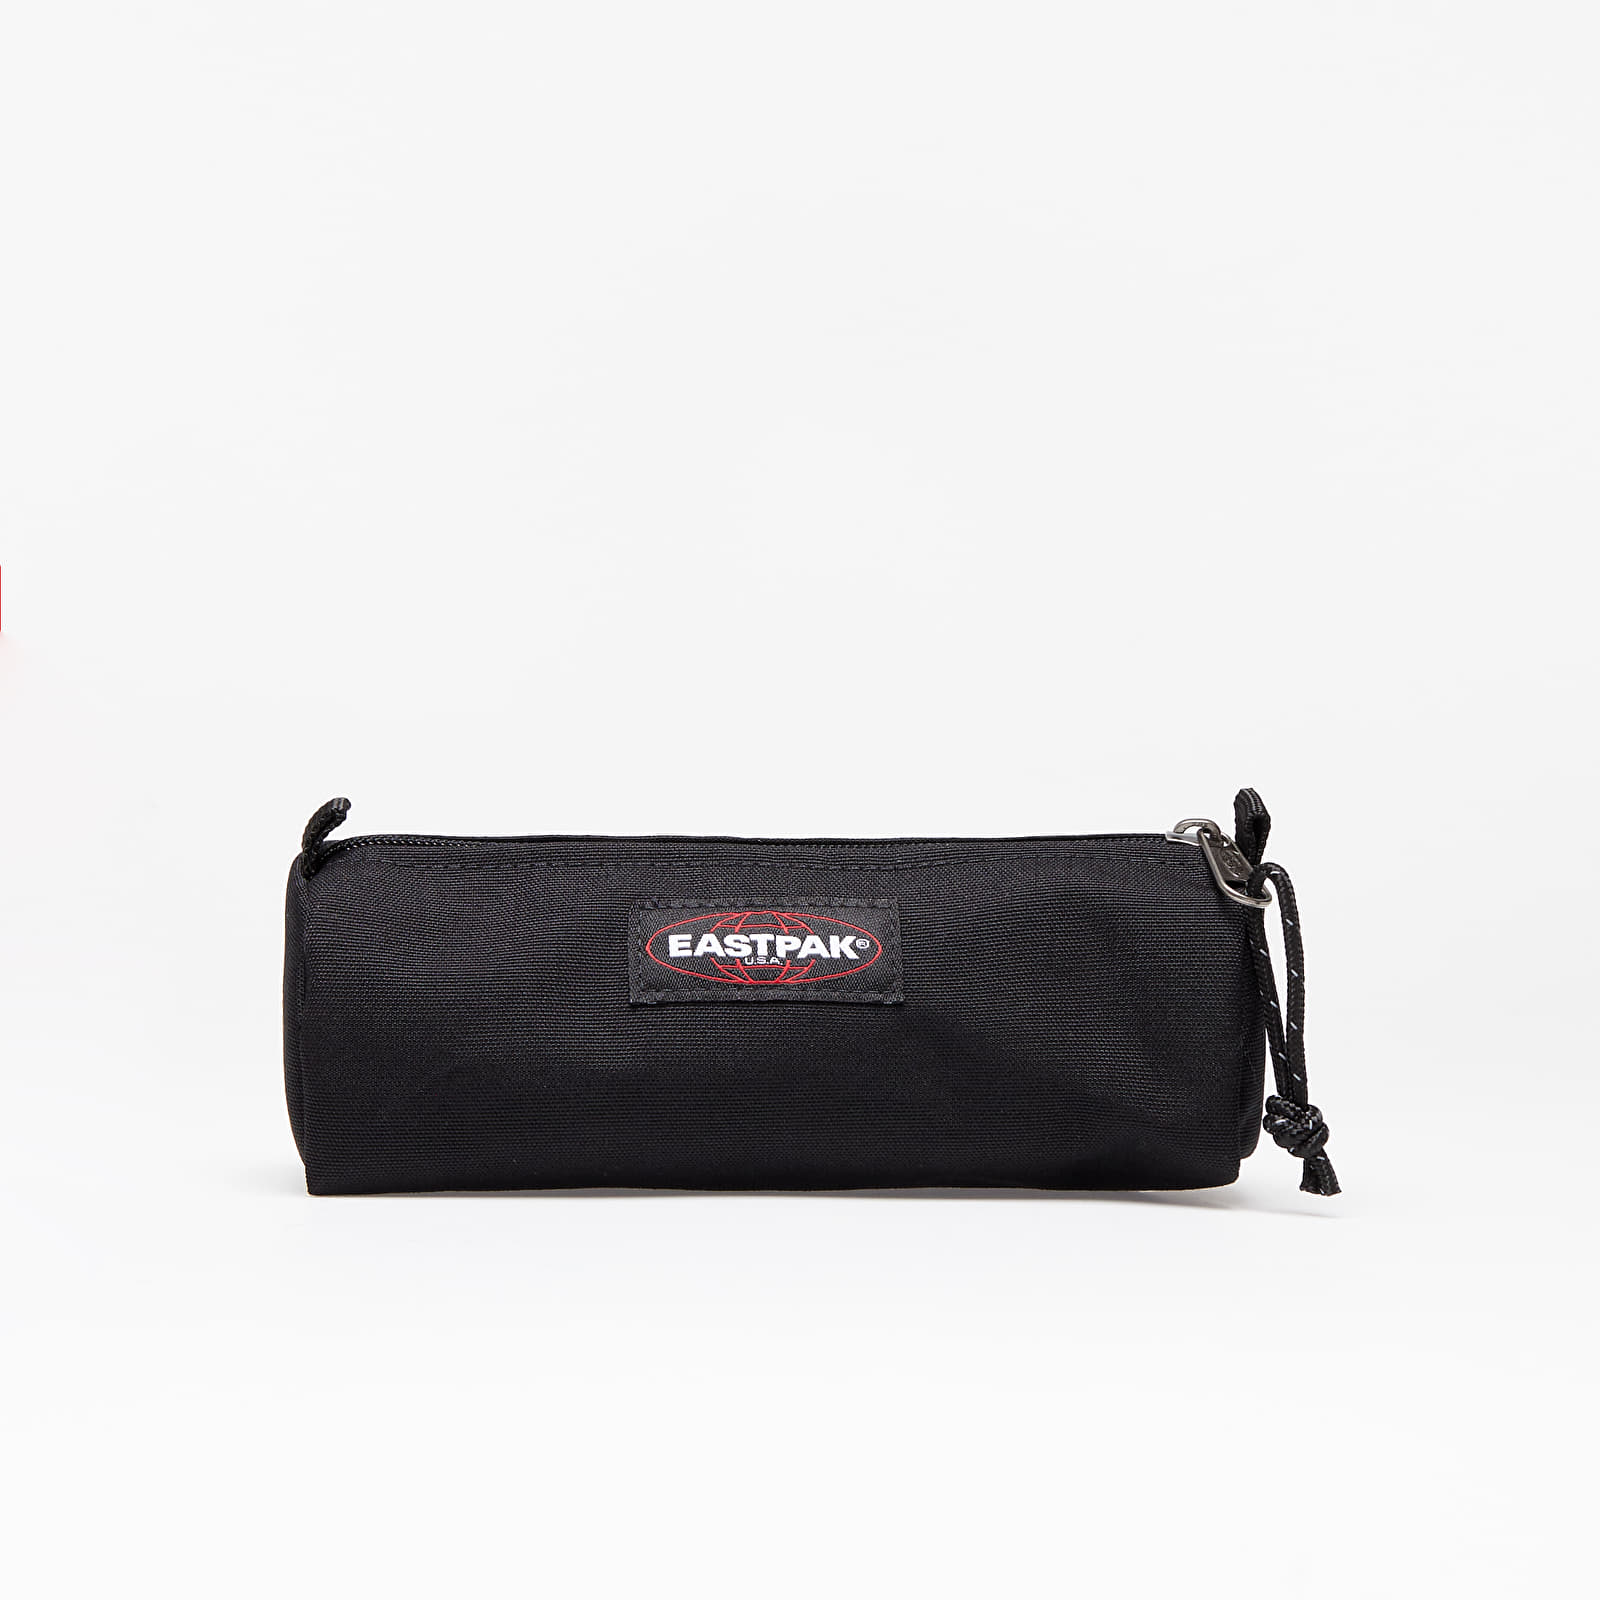 Pouzdra EASTPAK Benchmark Single Bag Black